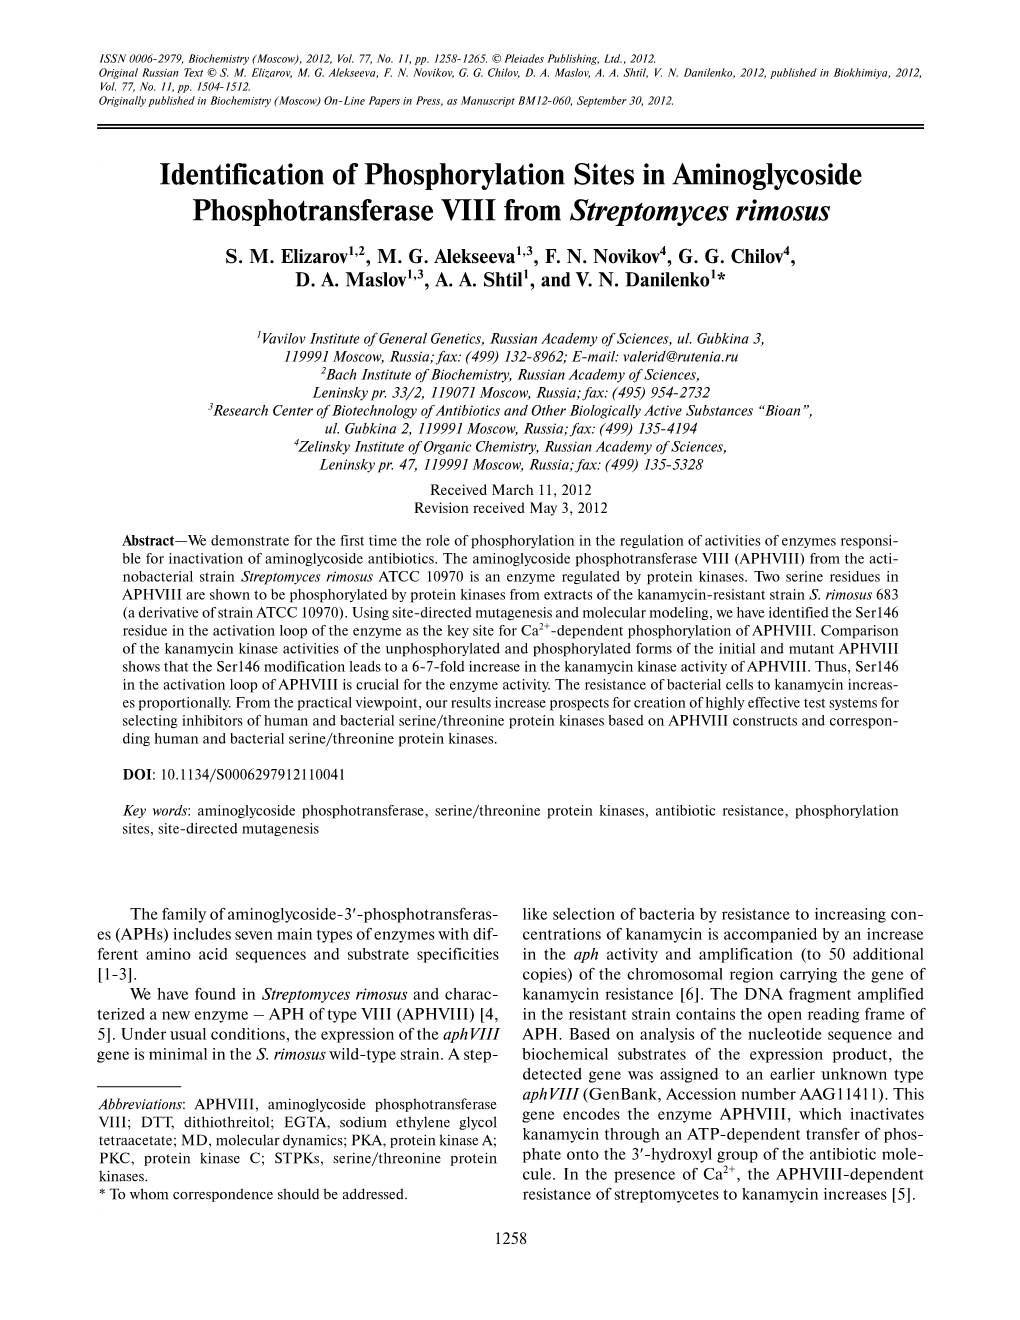 Identification of Phosphorylation Sites in Aminoglycoside Phosphotransferase VIII from Streptomyces Rimosus